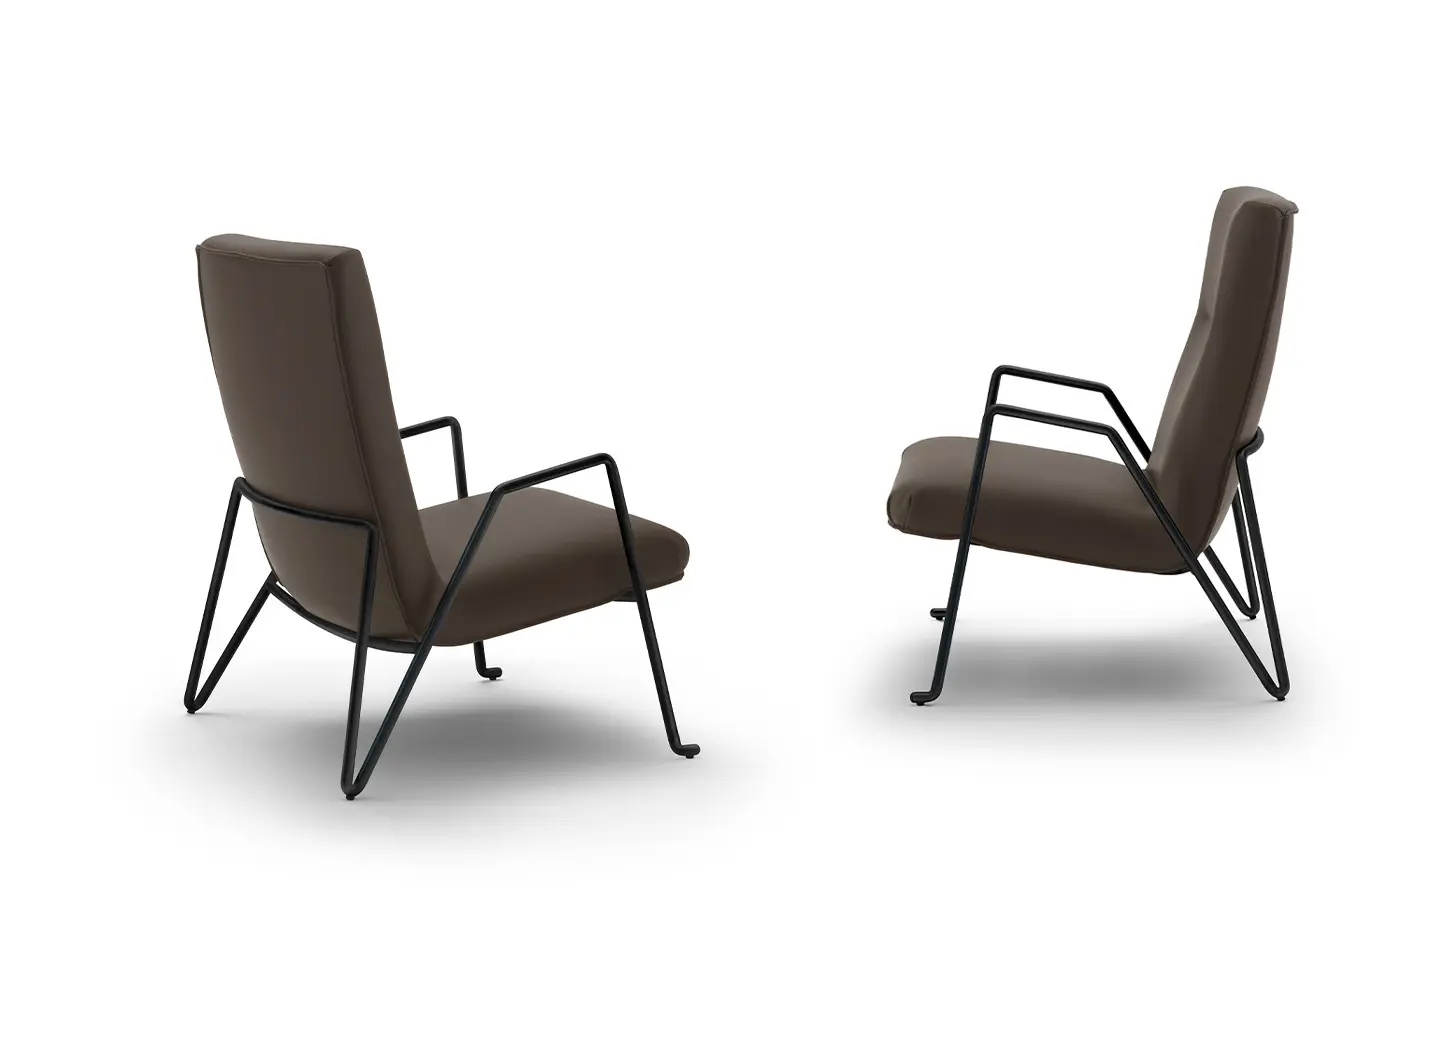 Solice armchair design Neri&Hu